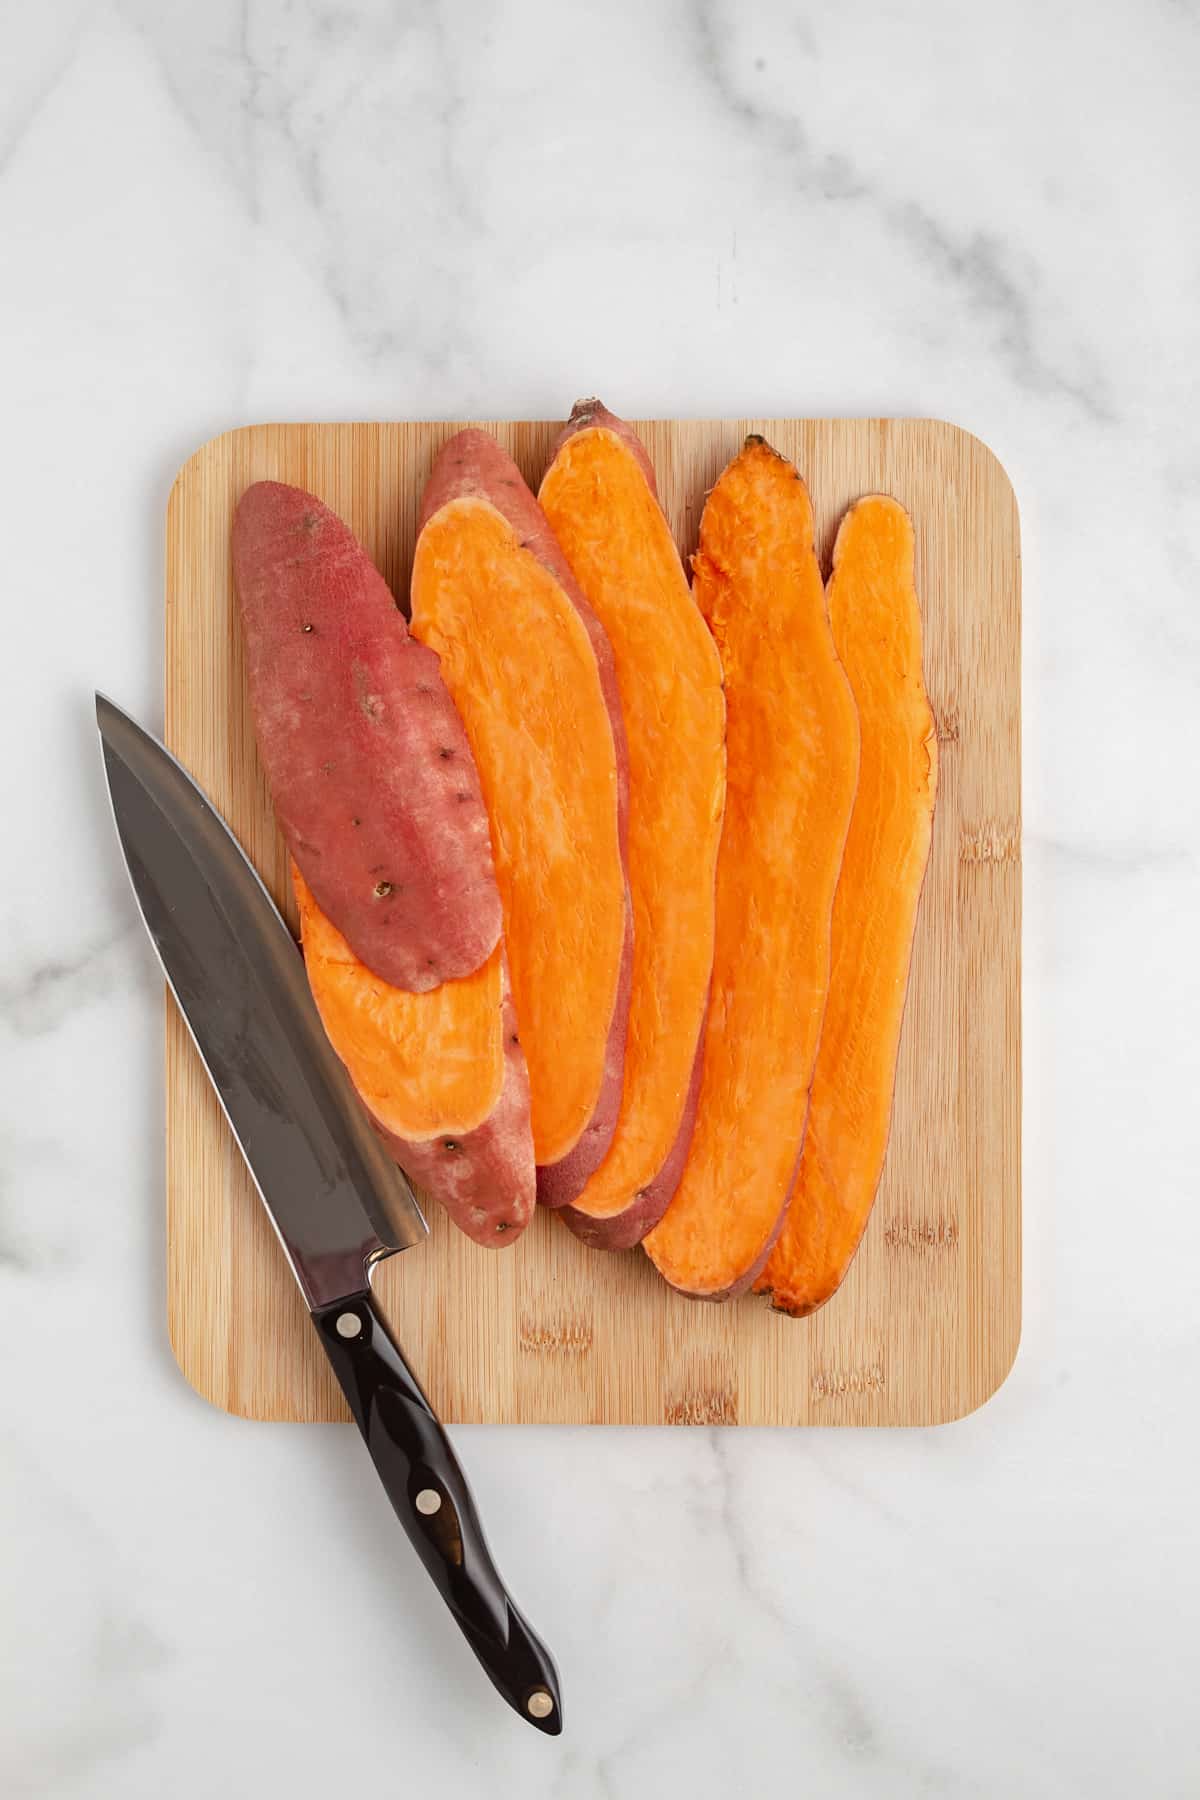 A sweet potato cut into slabs on a cutting board.